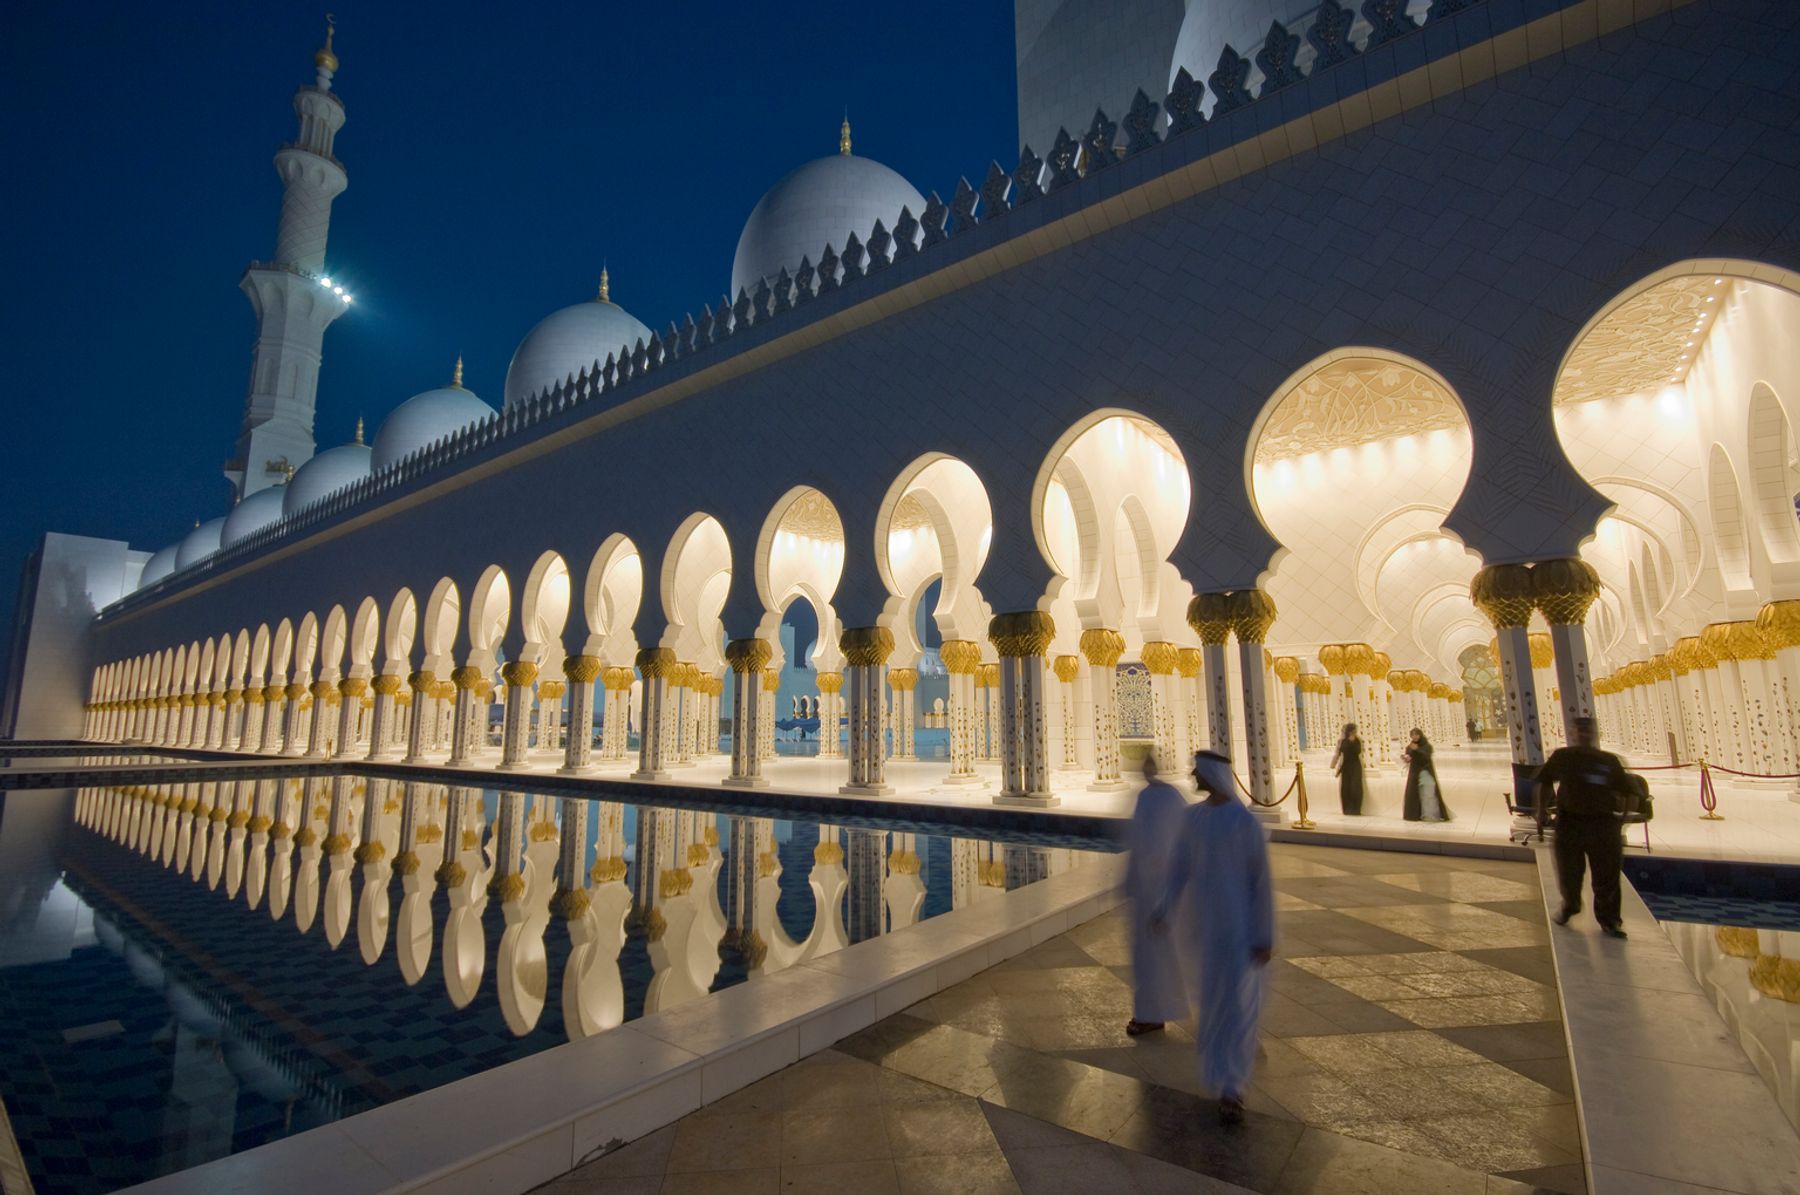 Sheikh Zayed bin Sultan Al Nahyan Mosque, Abu Dhabi. Architect: Yusef Abdelki (design), Halcrow, Dubai Office (implementation). Interior design: Spatium Architects, Milan. Lighting design: Speirs and Major Associates, Edinburgh.